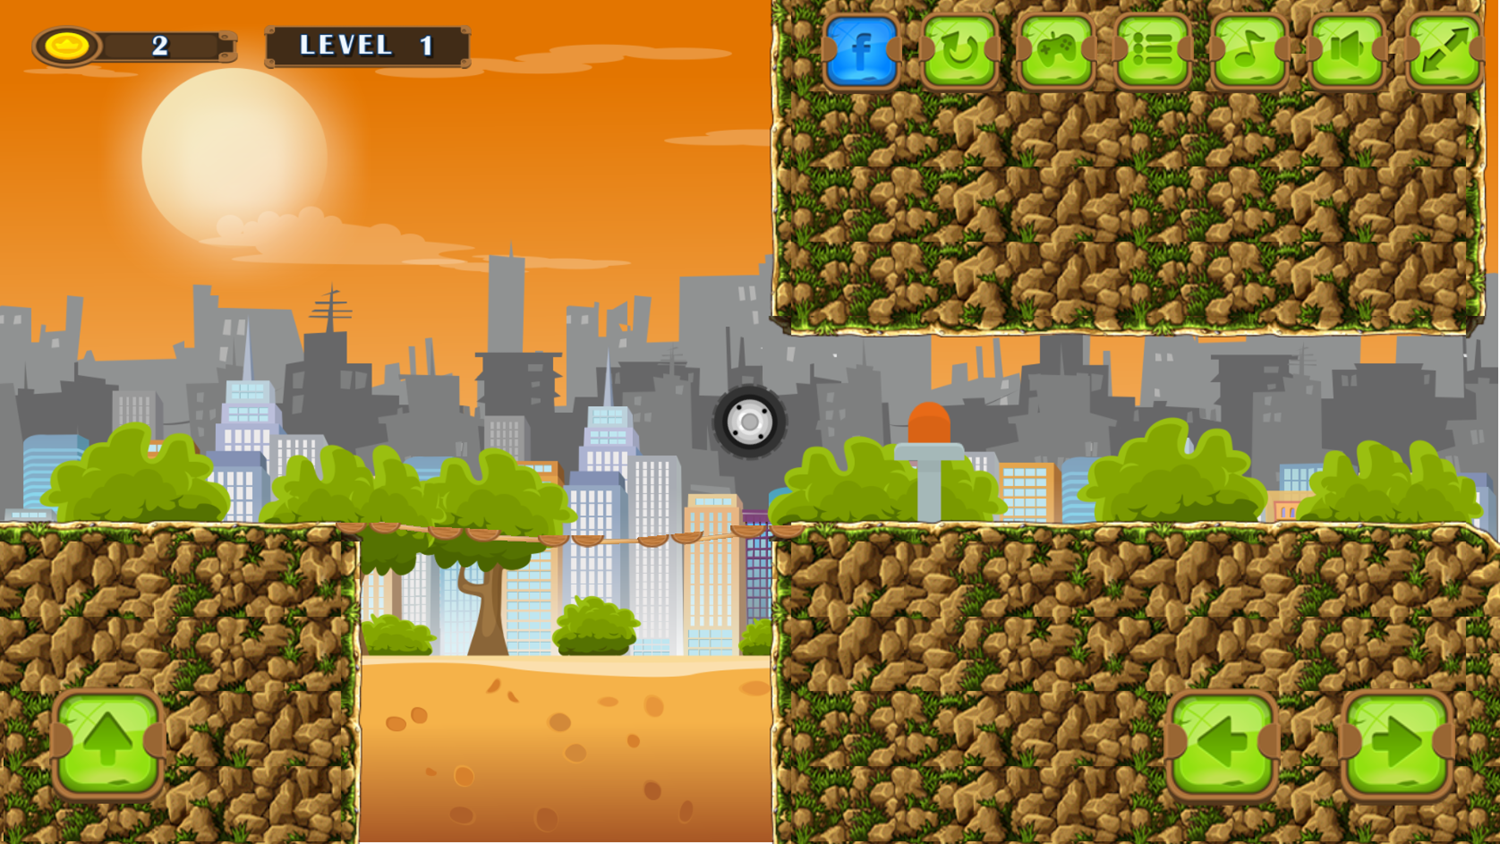 Car Backwheel Game Level Play Screenshot.